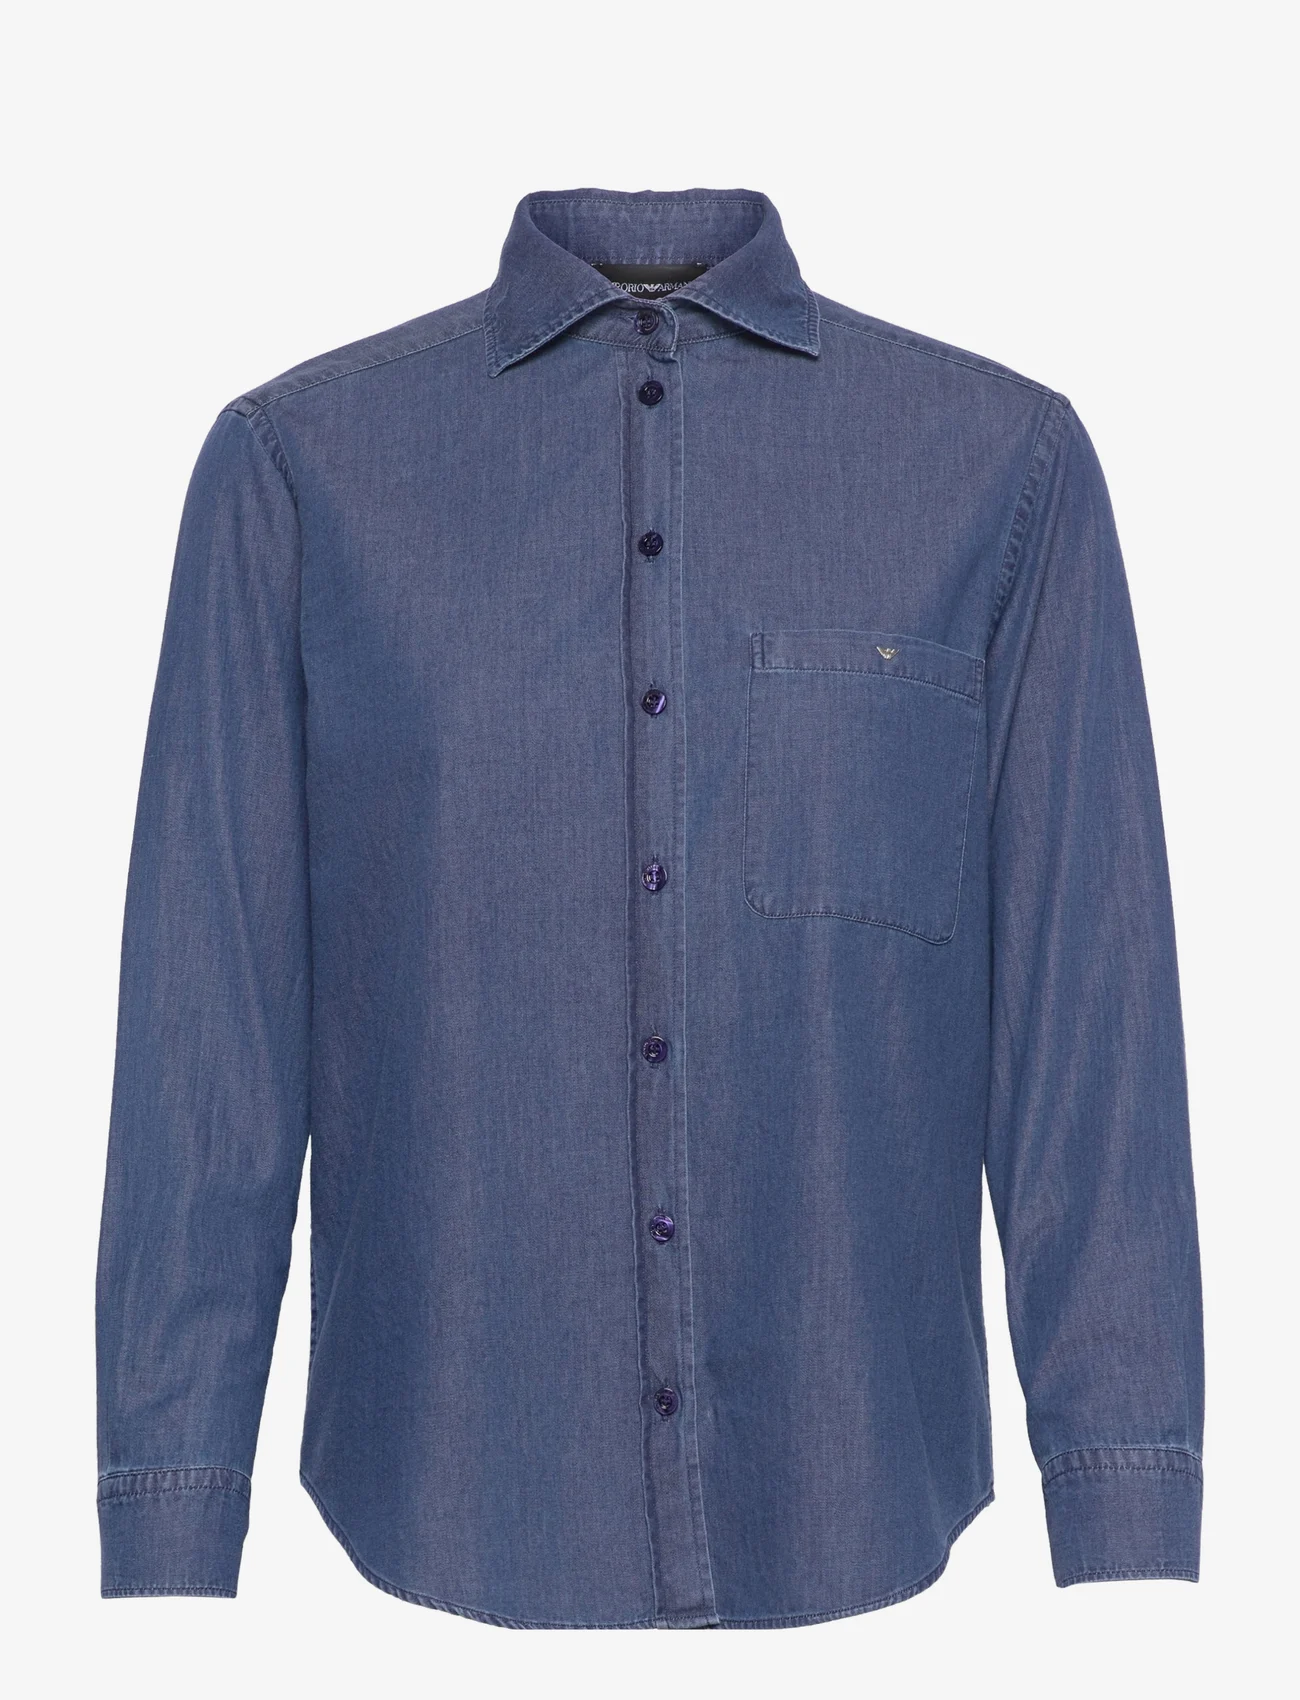 Emporio Armani - SHIRT - denimskjorter - denim blu - 0